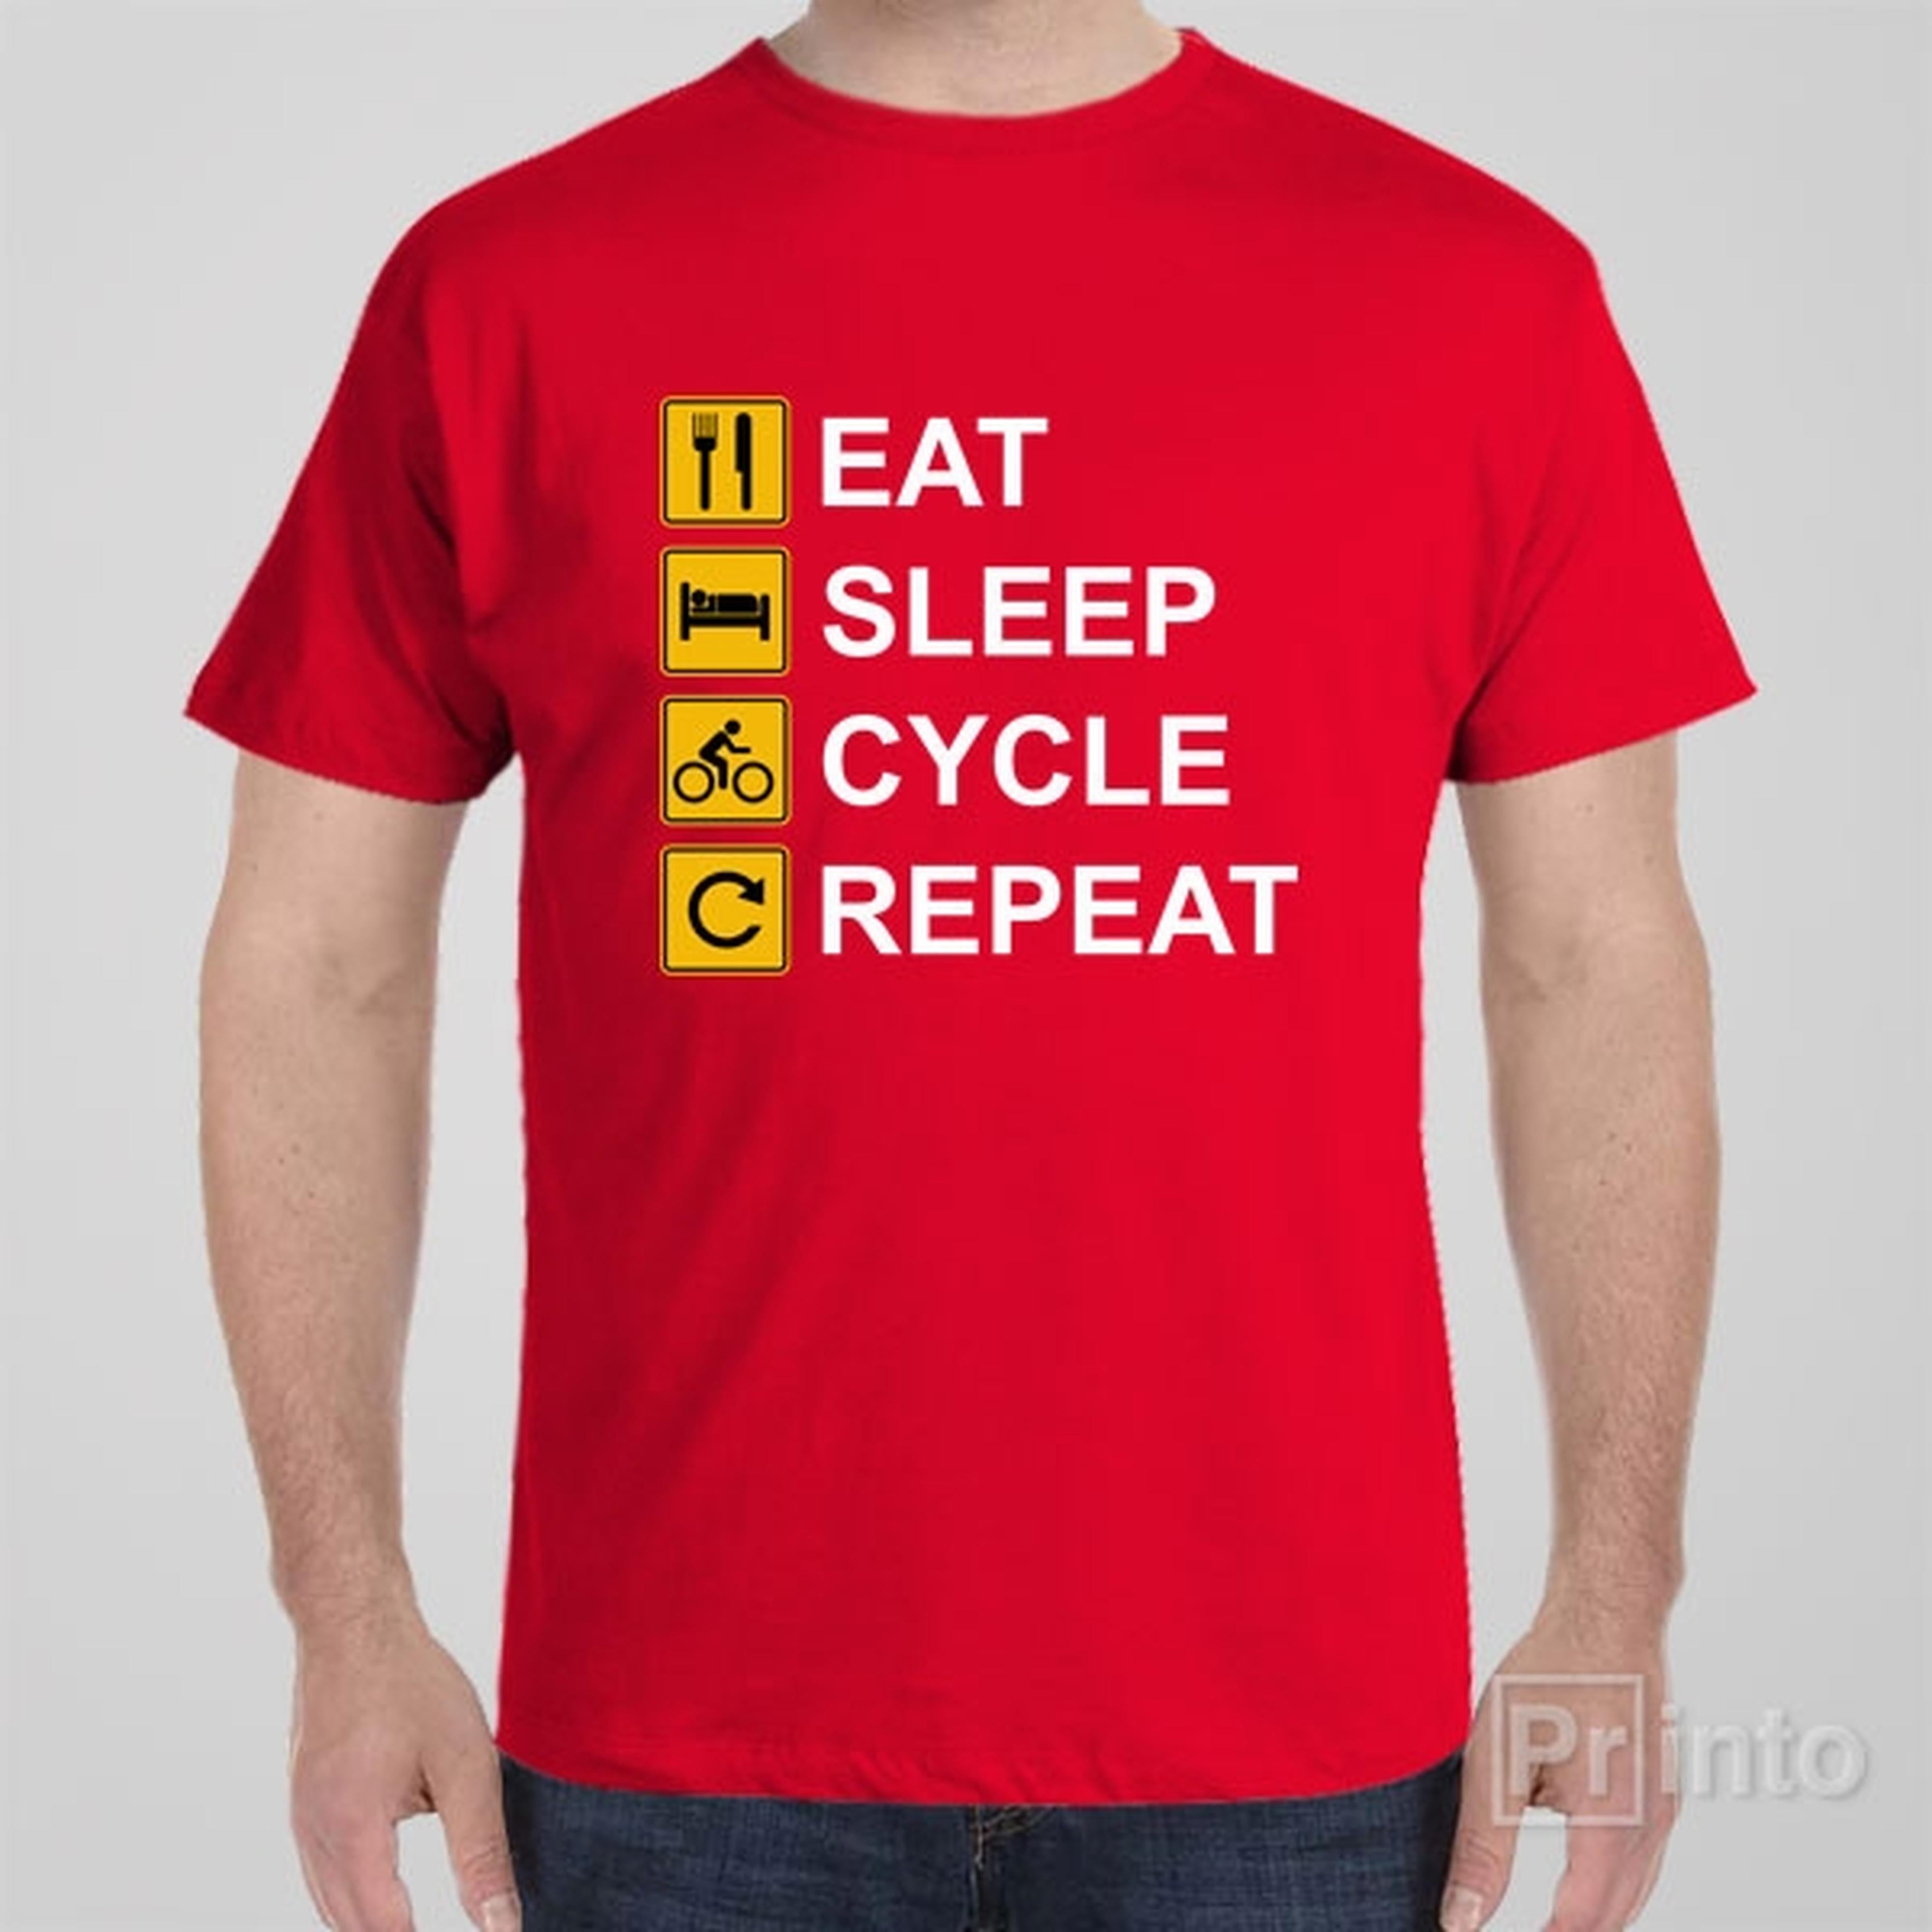 eat-sleep-cycle-repeat-t-shirt